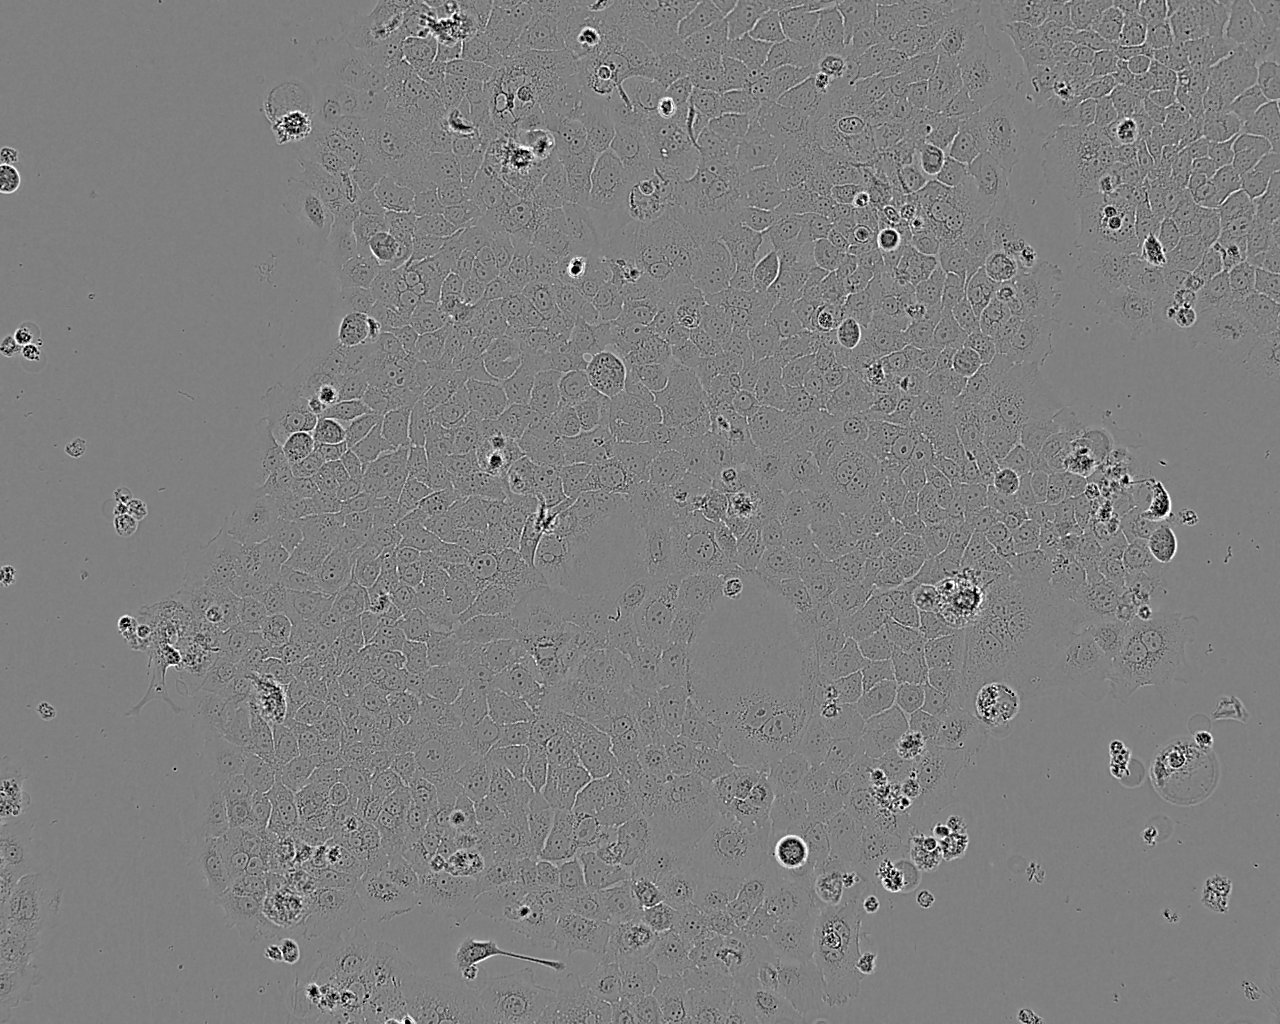 C32 [Human melanoma] epithelioid cells人黑色素瘤细胞系,C32 [Human melanoma] epithelioid cells